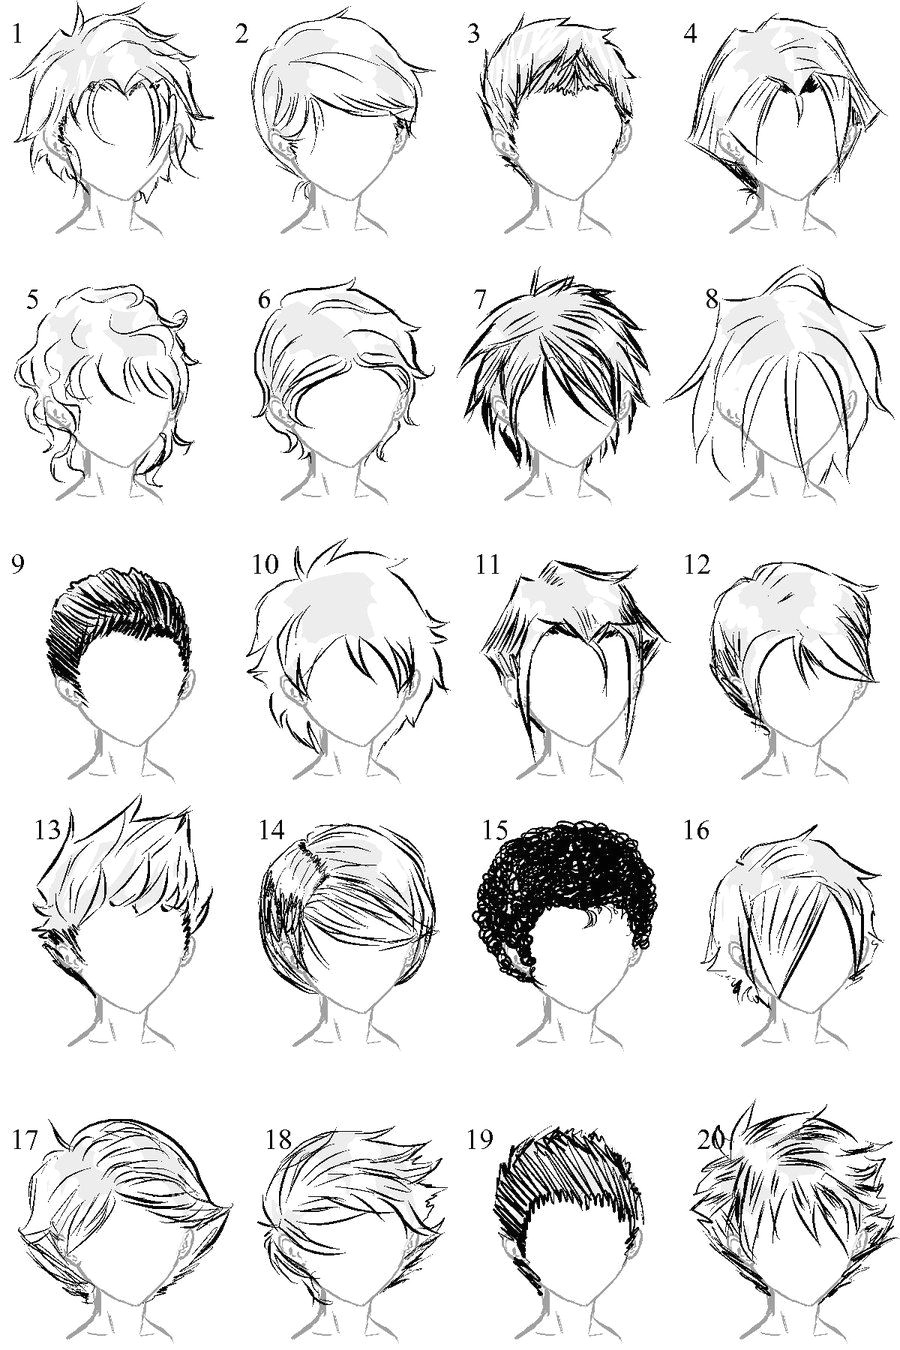 boy hair drawing hair styles drawing anime hair drawing short hair drawing